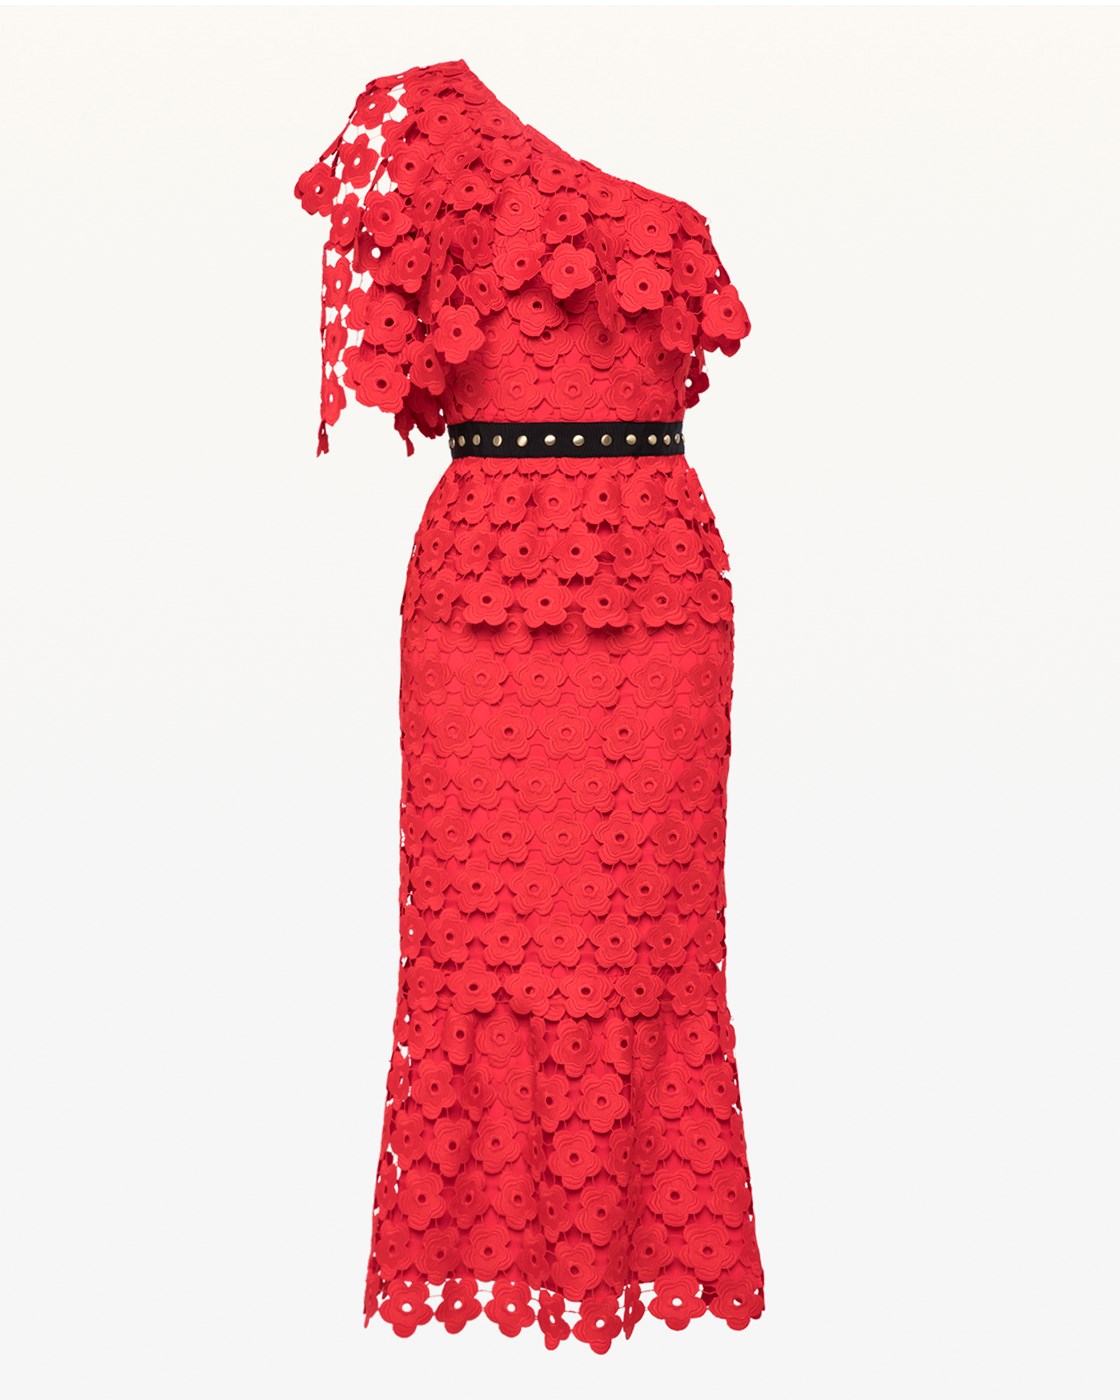 Designer Dresses & Rompers| Juicy Couture